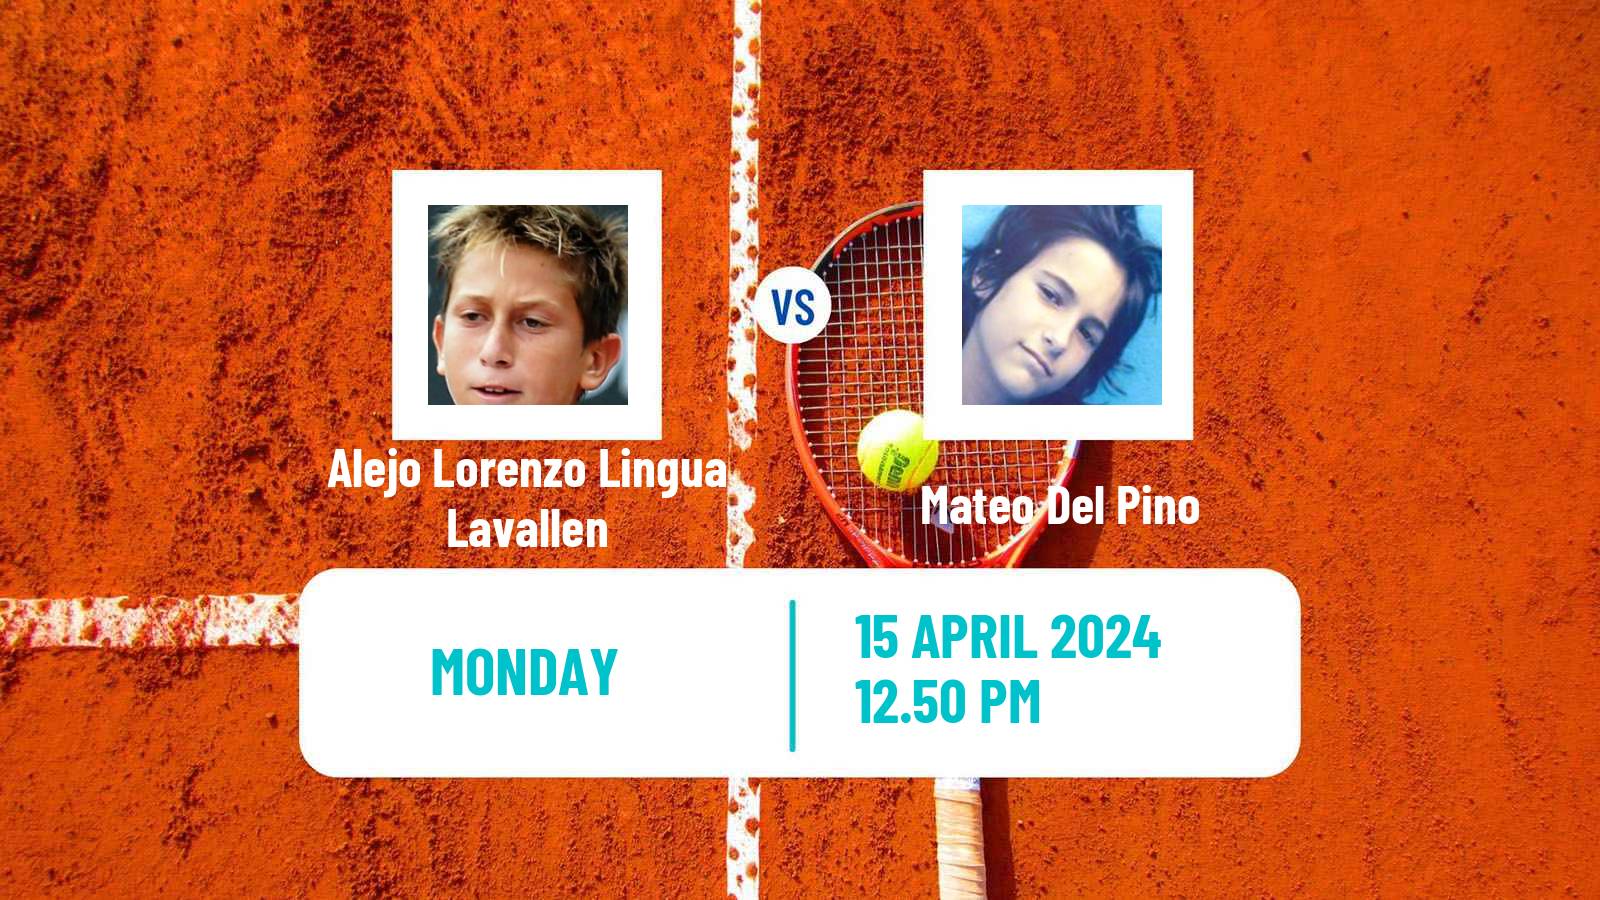 Tennis San Miguel De Tucuman Challenger Men Alejo Lorenzo Lingua Lavallen - Mateo Del Pino